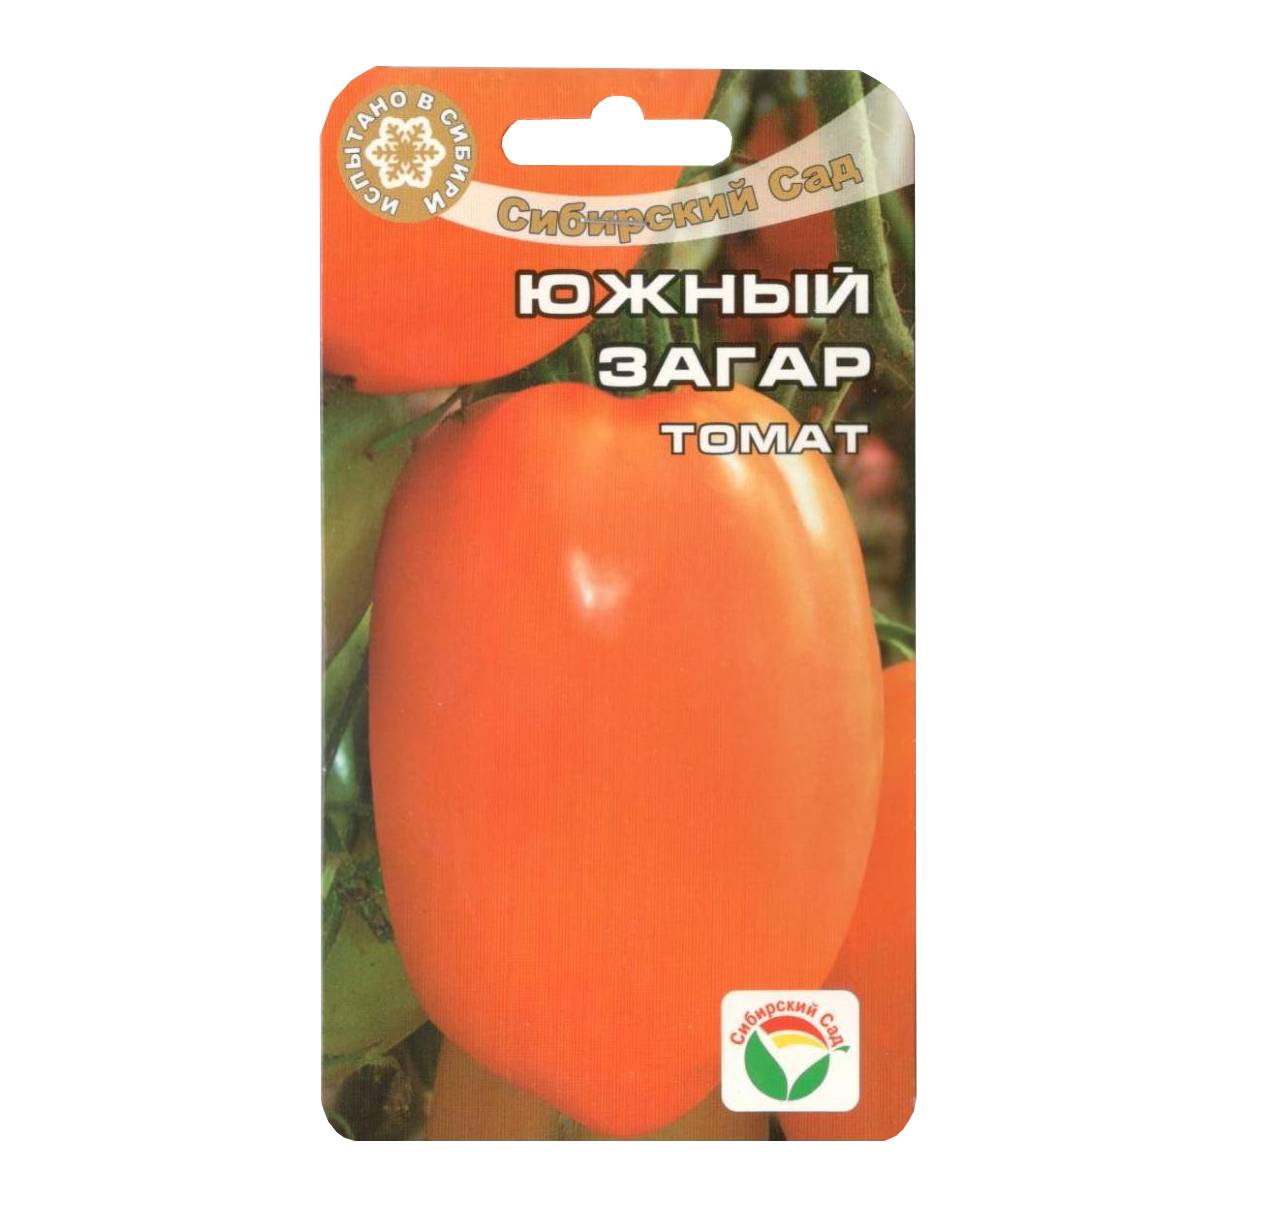 Характеристика и описание сорта томата южный загар, урожайность. томат южный загар: отзывы, фото, урожайность